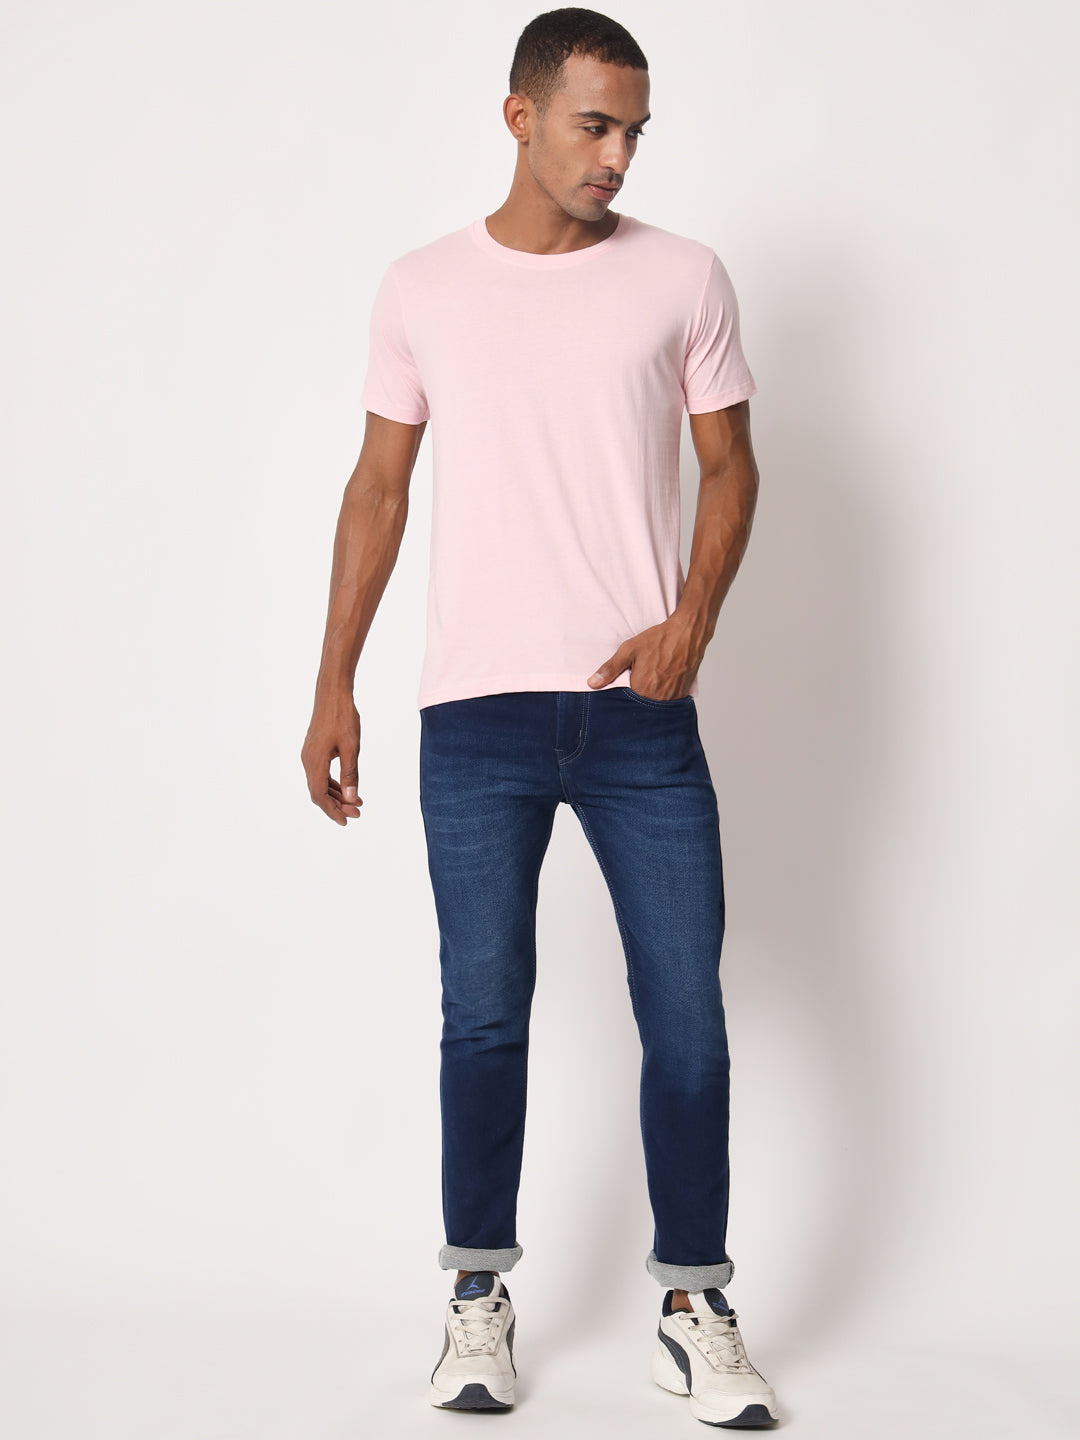 Men's T-Shirt Baby Pink